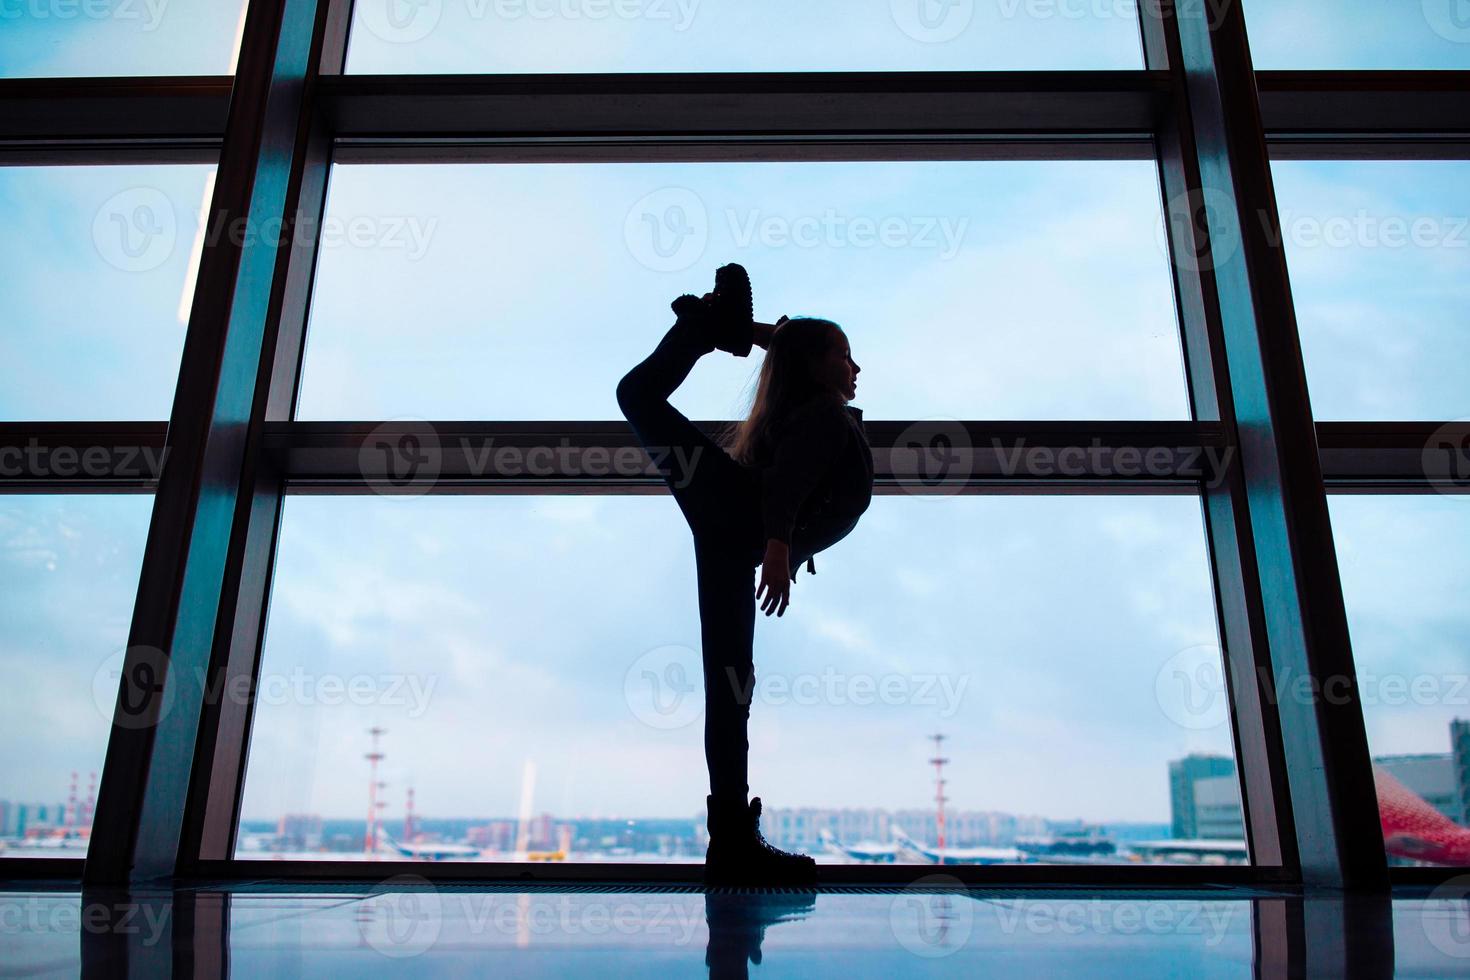 menina no aeroporto perto da grande janela enquanto espera pelo embarque foto